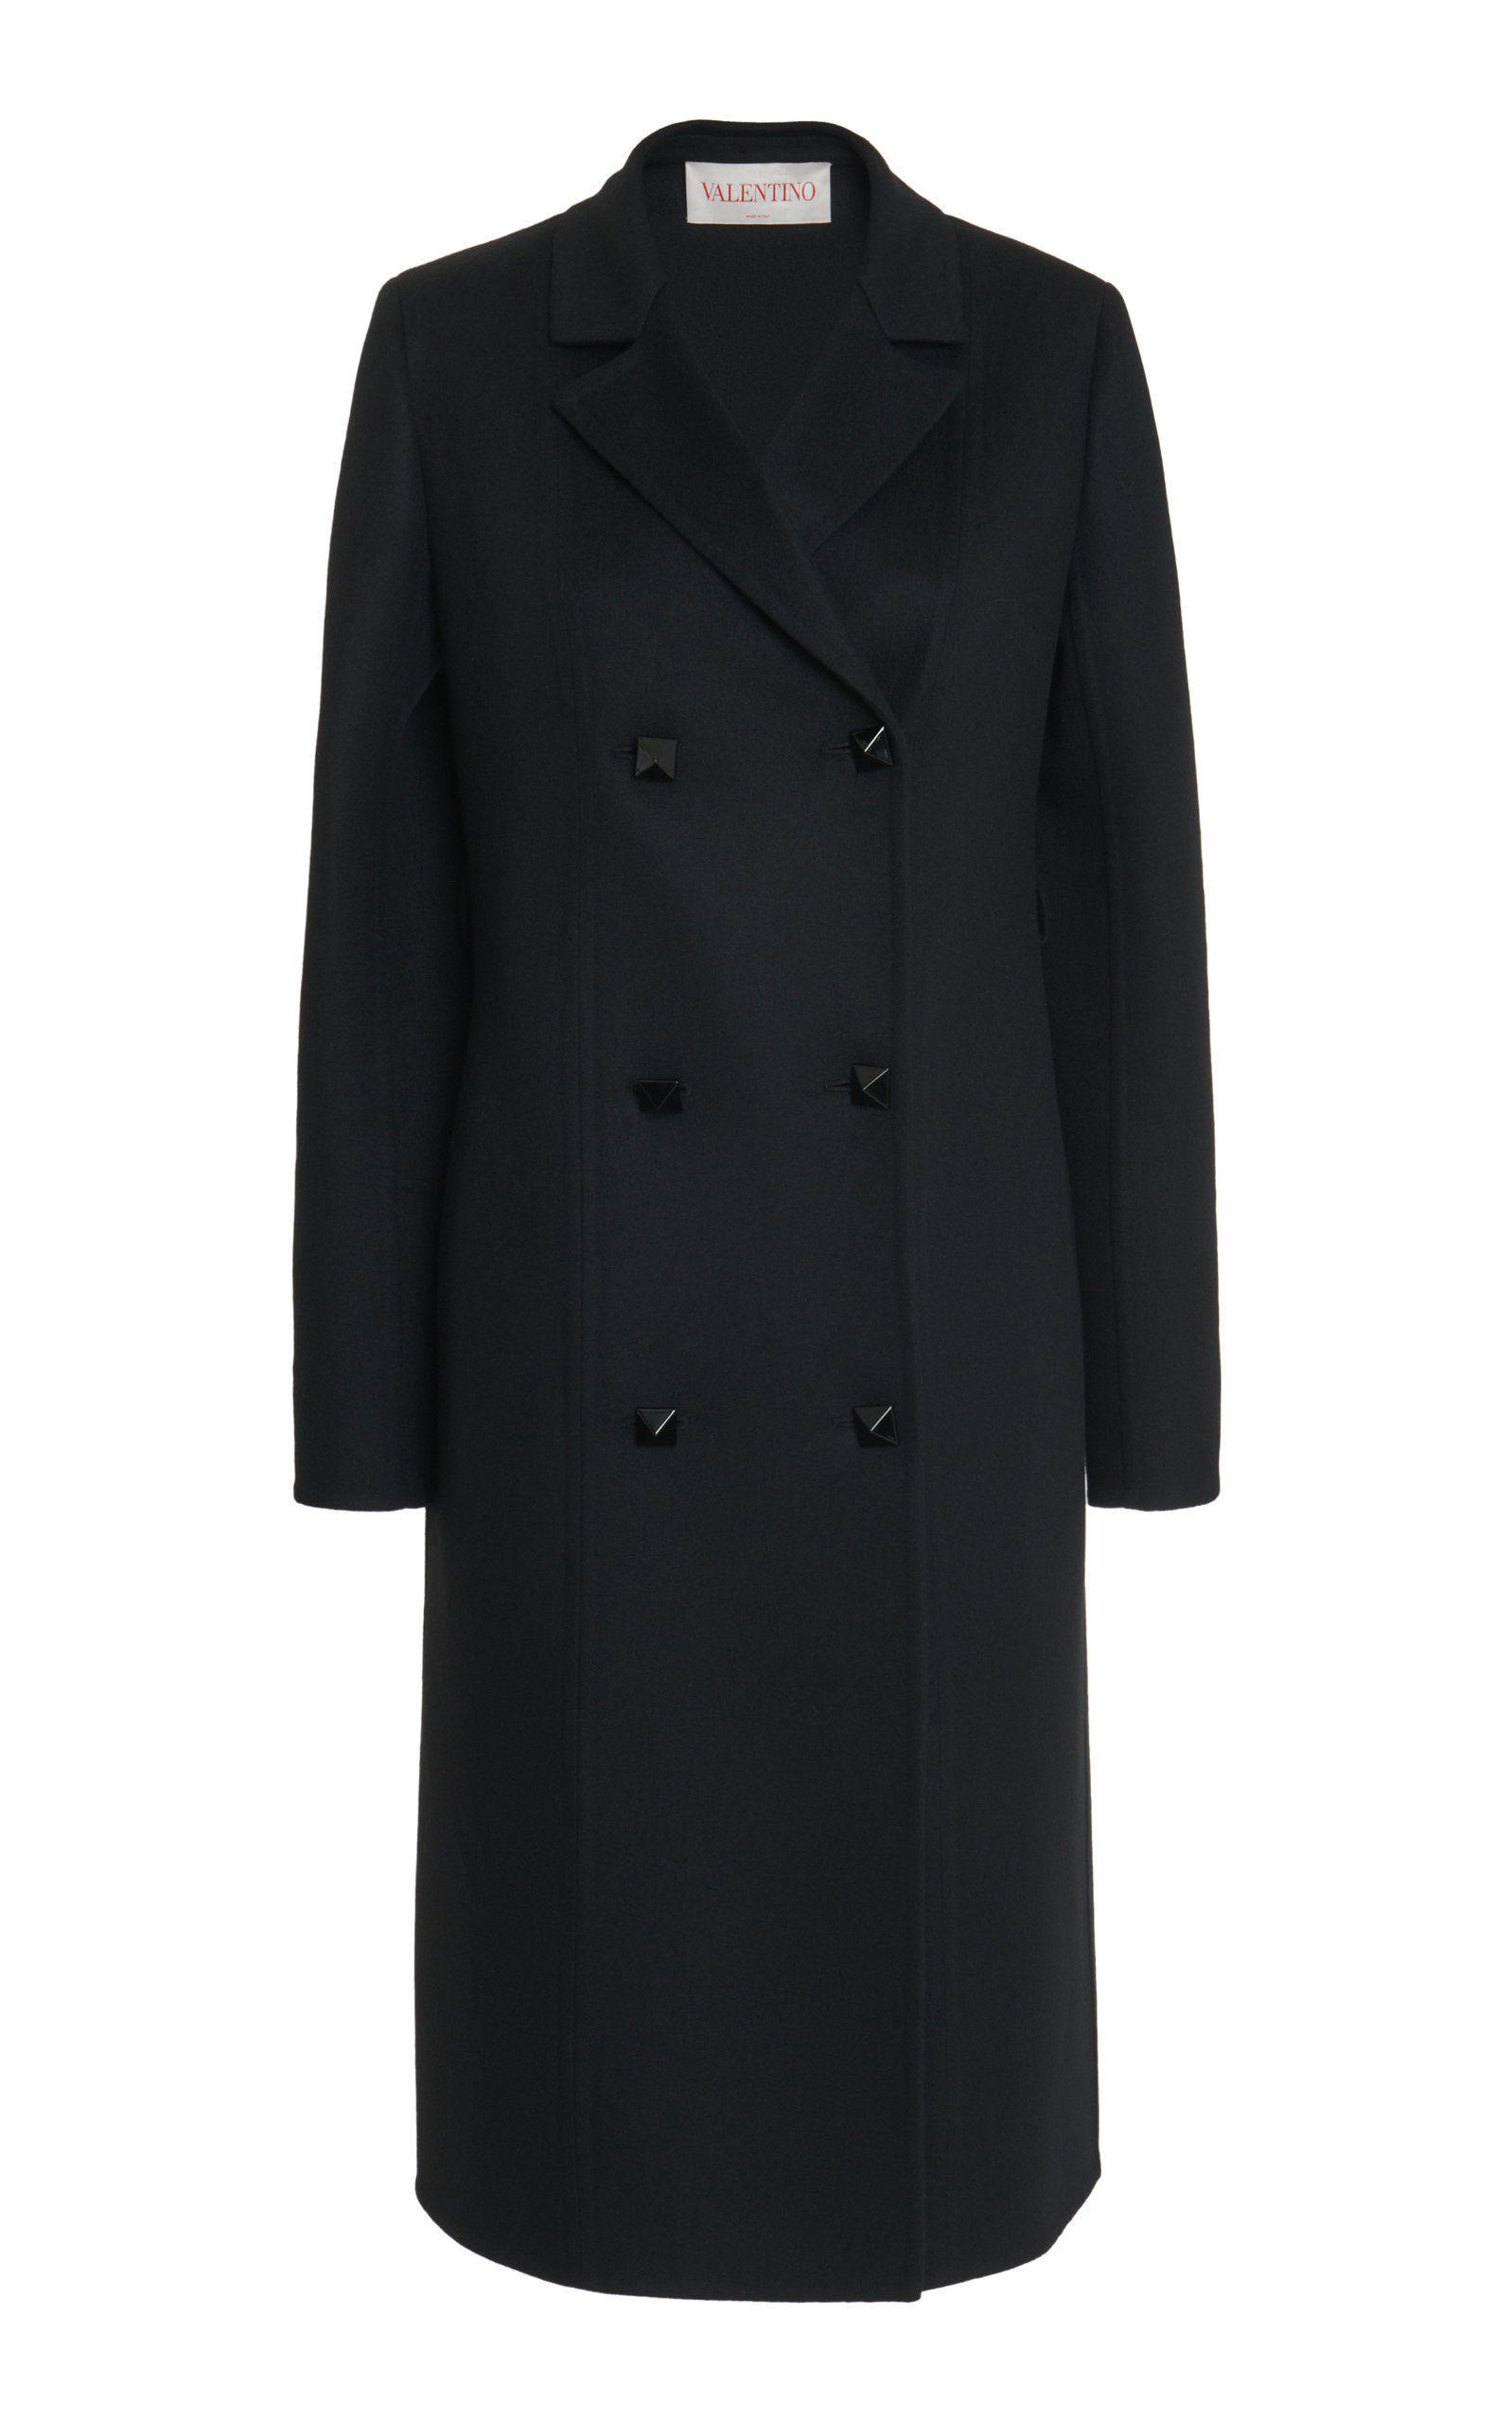 Valentino - Women's Wool And Cashmere Coat - Black - IT 42 - Moda Operandi